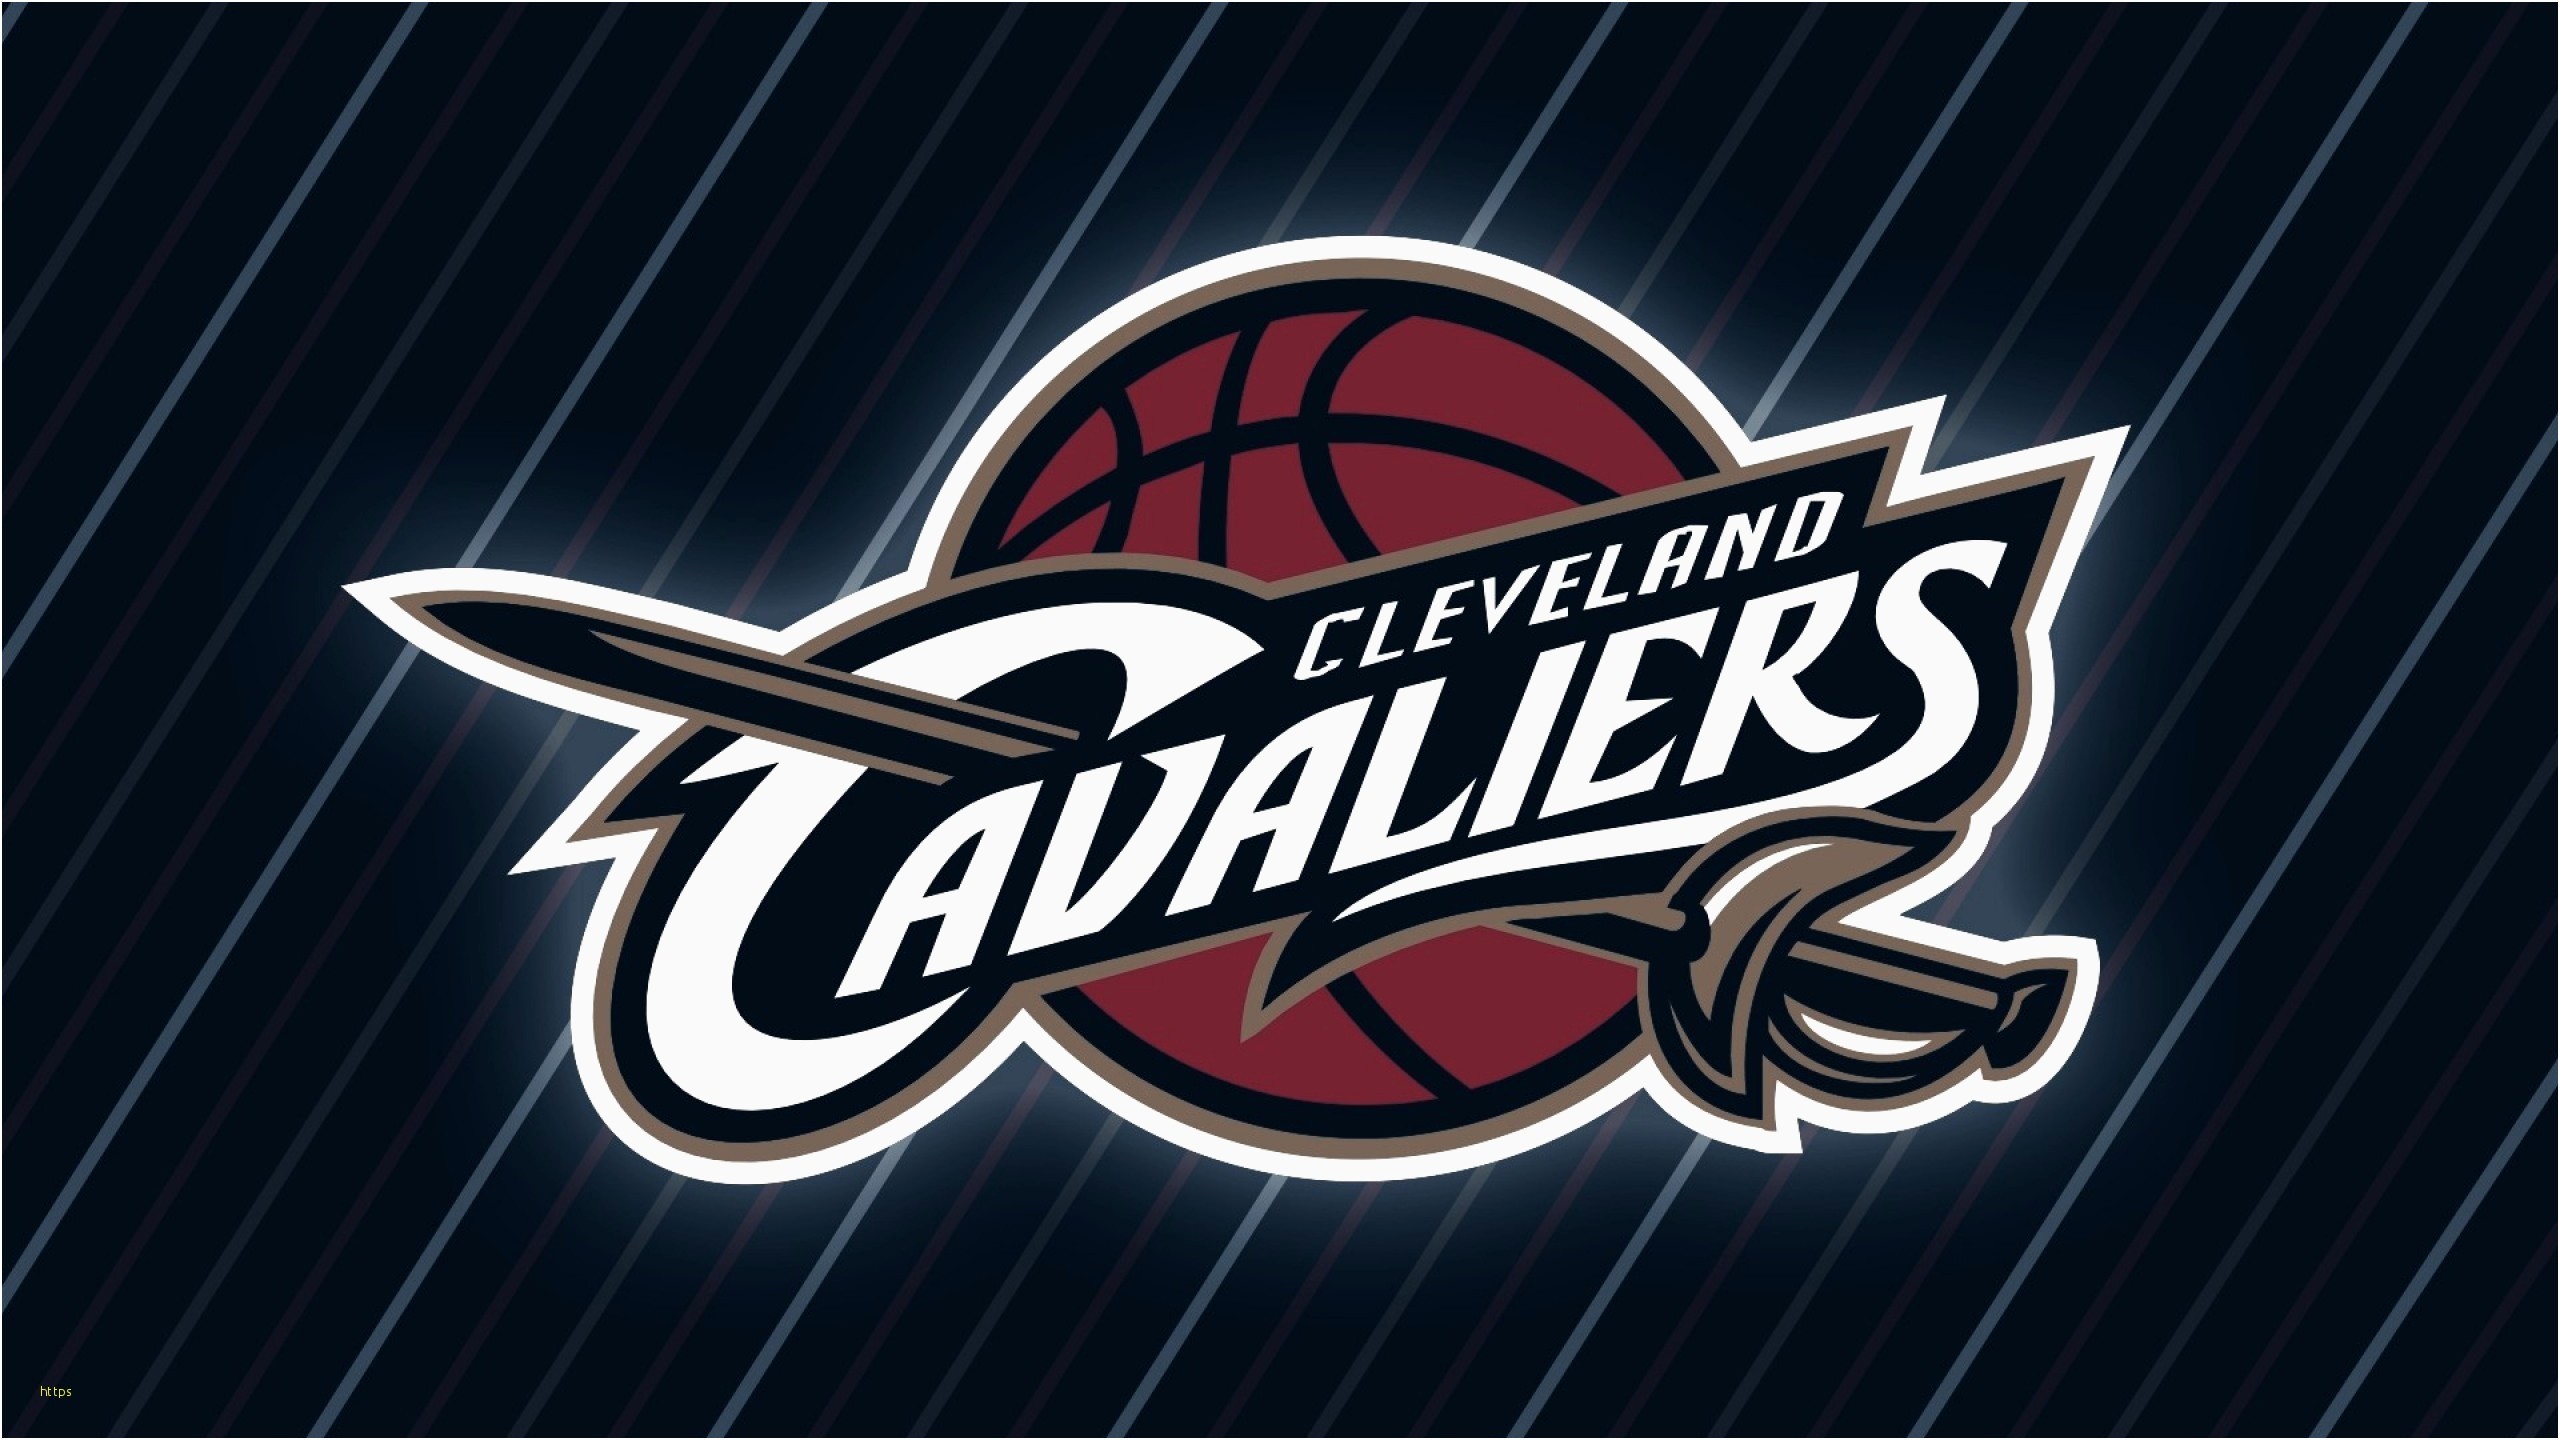 2560x1440 Cleveland Cavaliers Wallpaper Luxury Cleveland Cavaliers Nba Basketball 35  Wallpaper ...